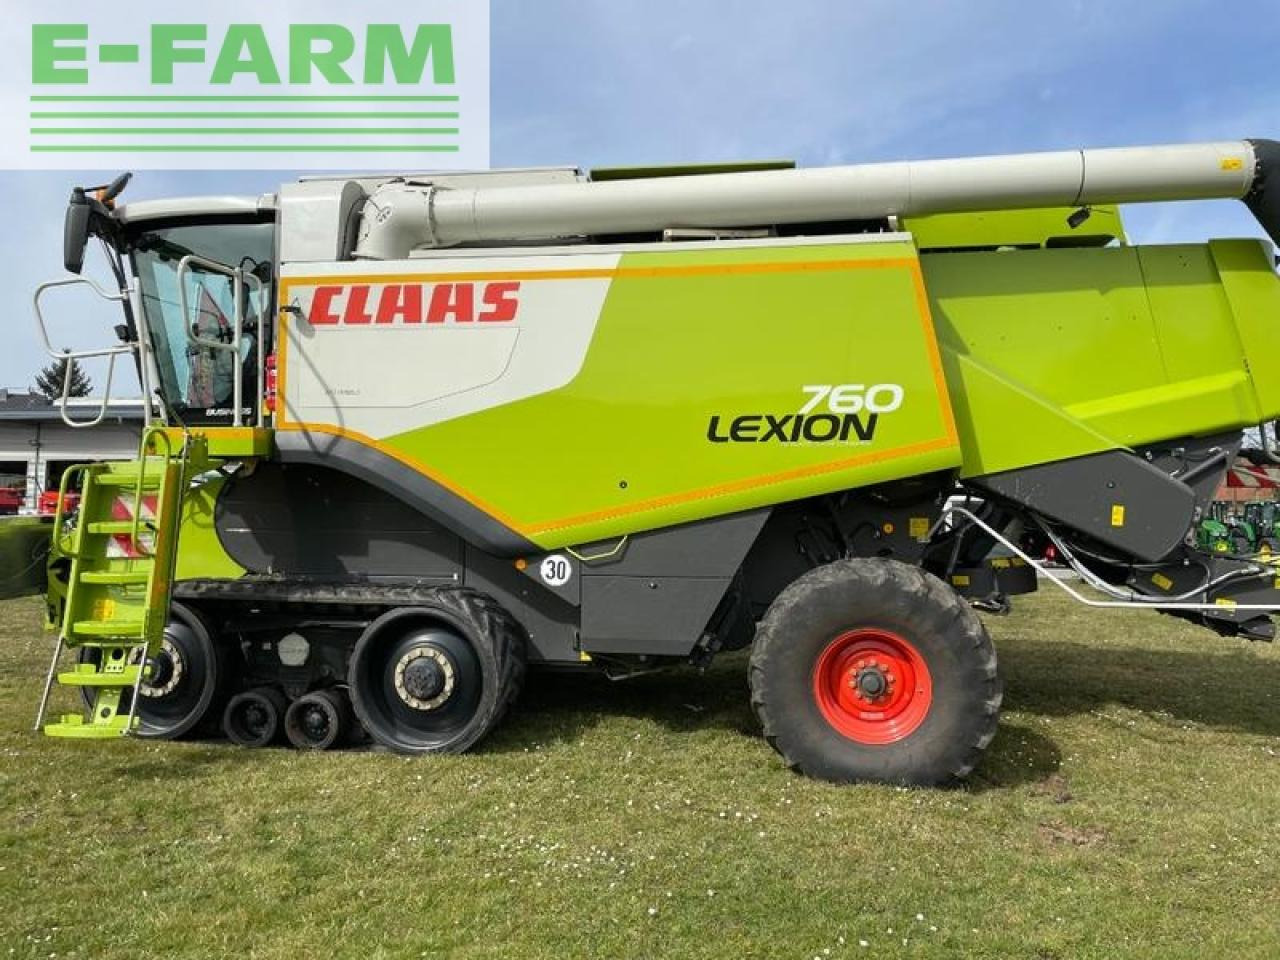 Combine harvester CLAAS lexion 760 tt: picture 6